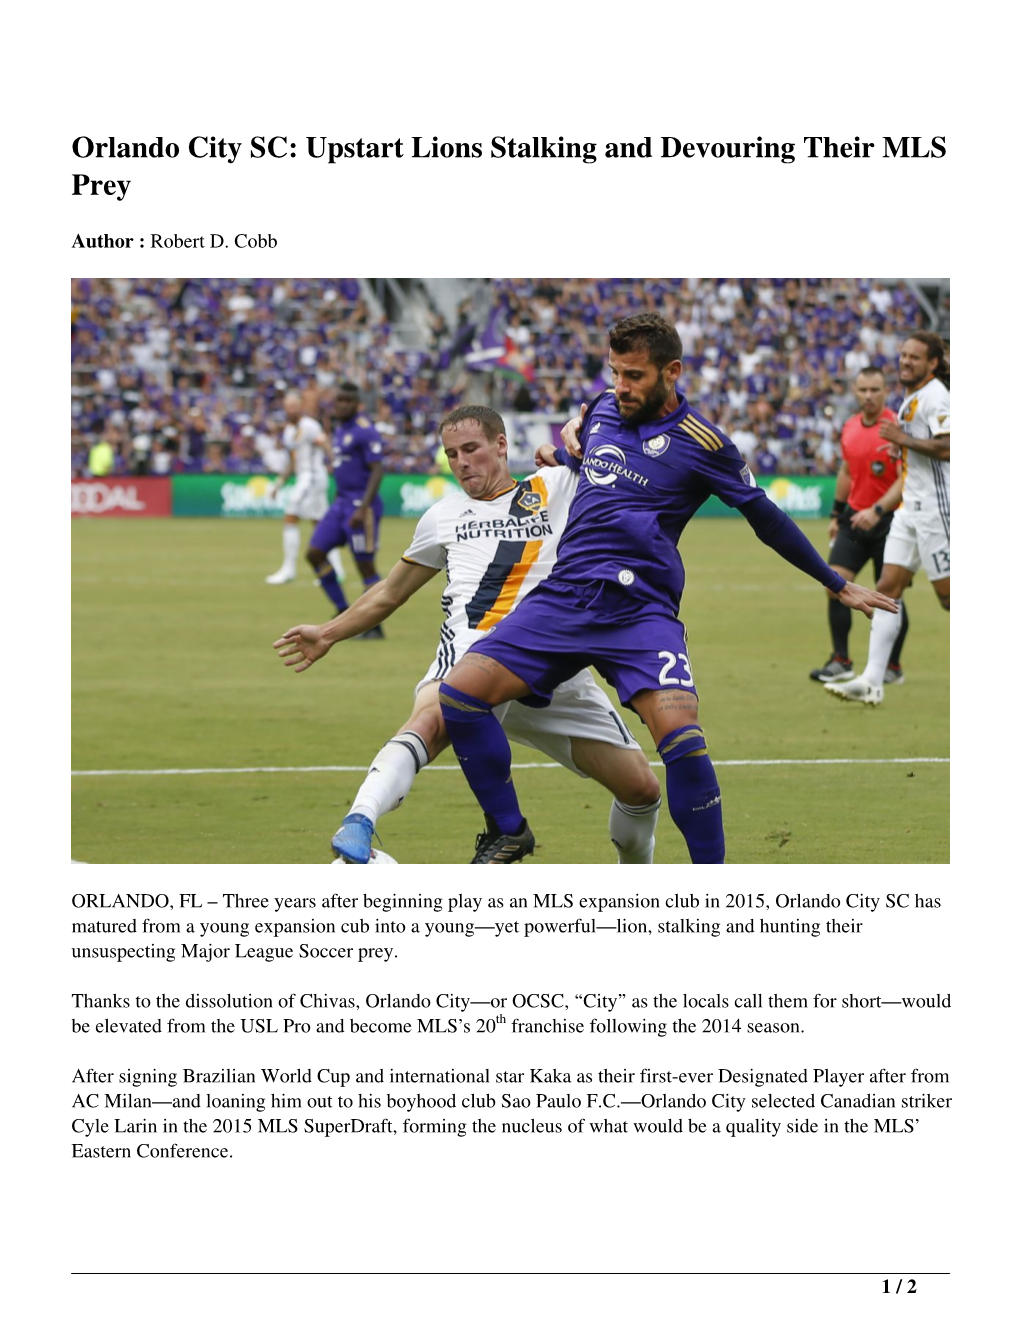 Orlando City SC: Upstart Lions Stalking and Devouring Their MLS Prey